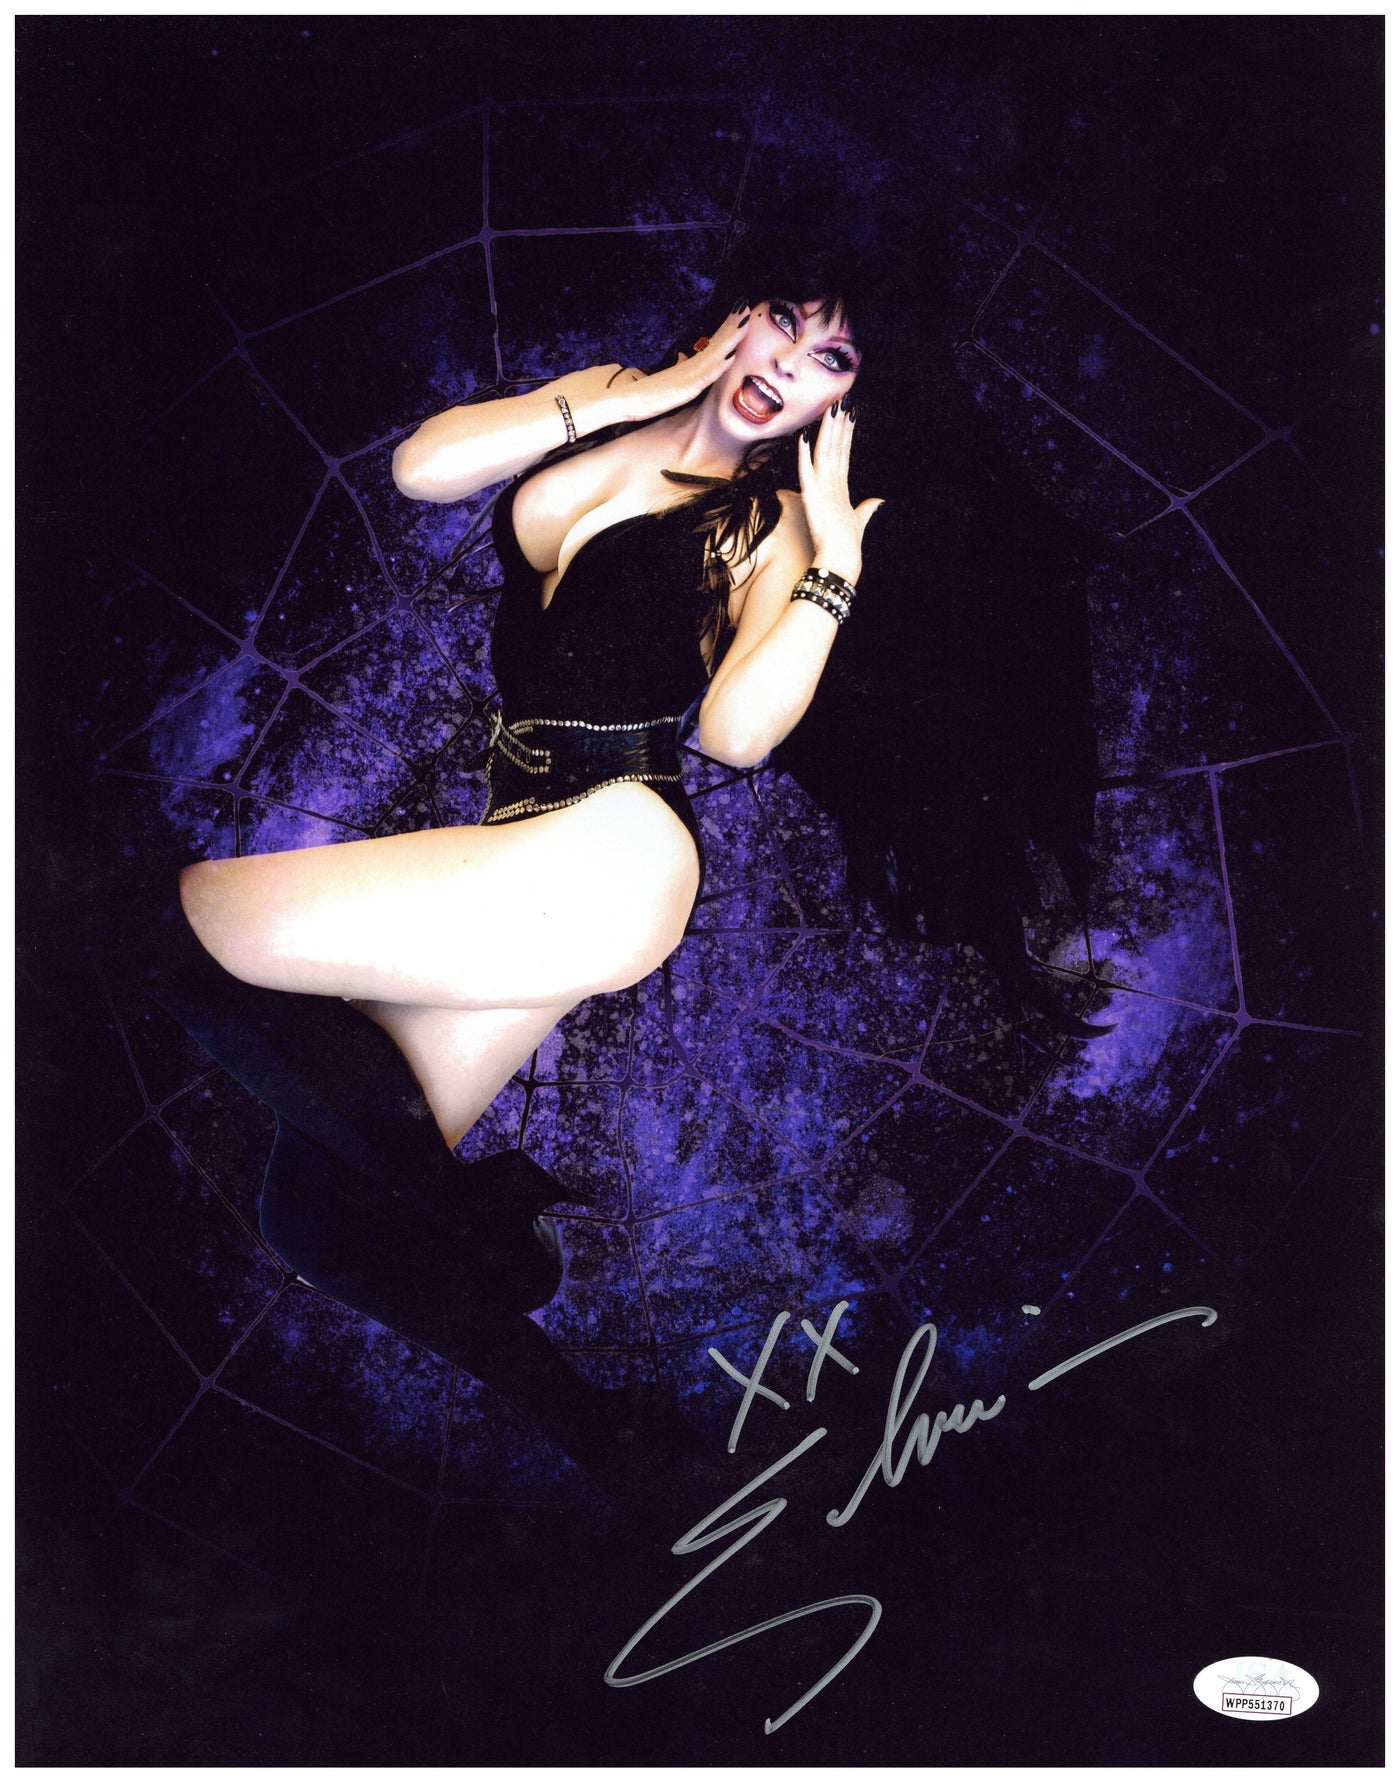 Elvira Signed 11x14 Photo Mistress of the Dark Authentic Autographed JSA COA 6